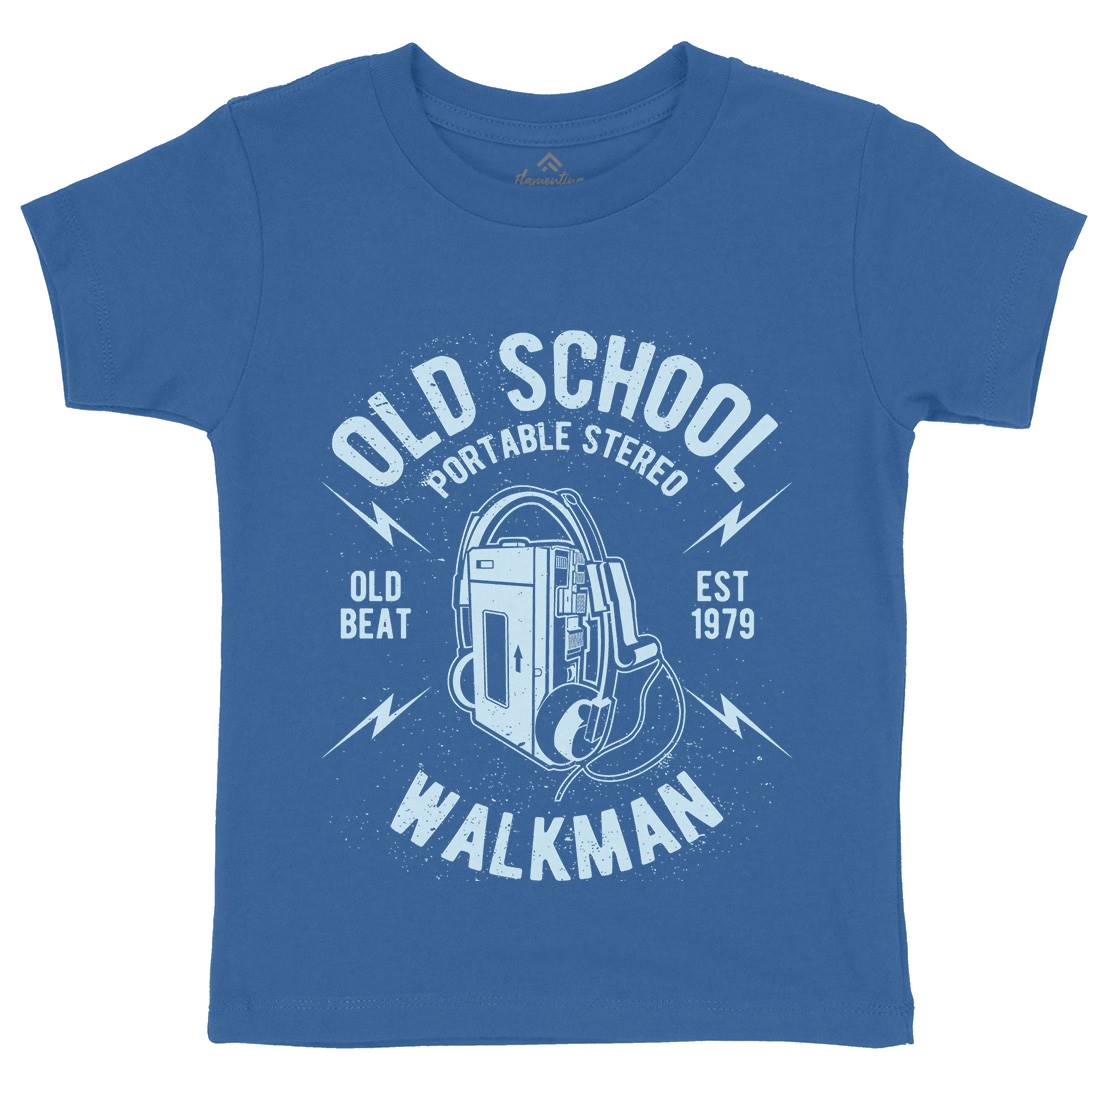 Old School Player Kids Crew Neck T-Shirt Music A102